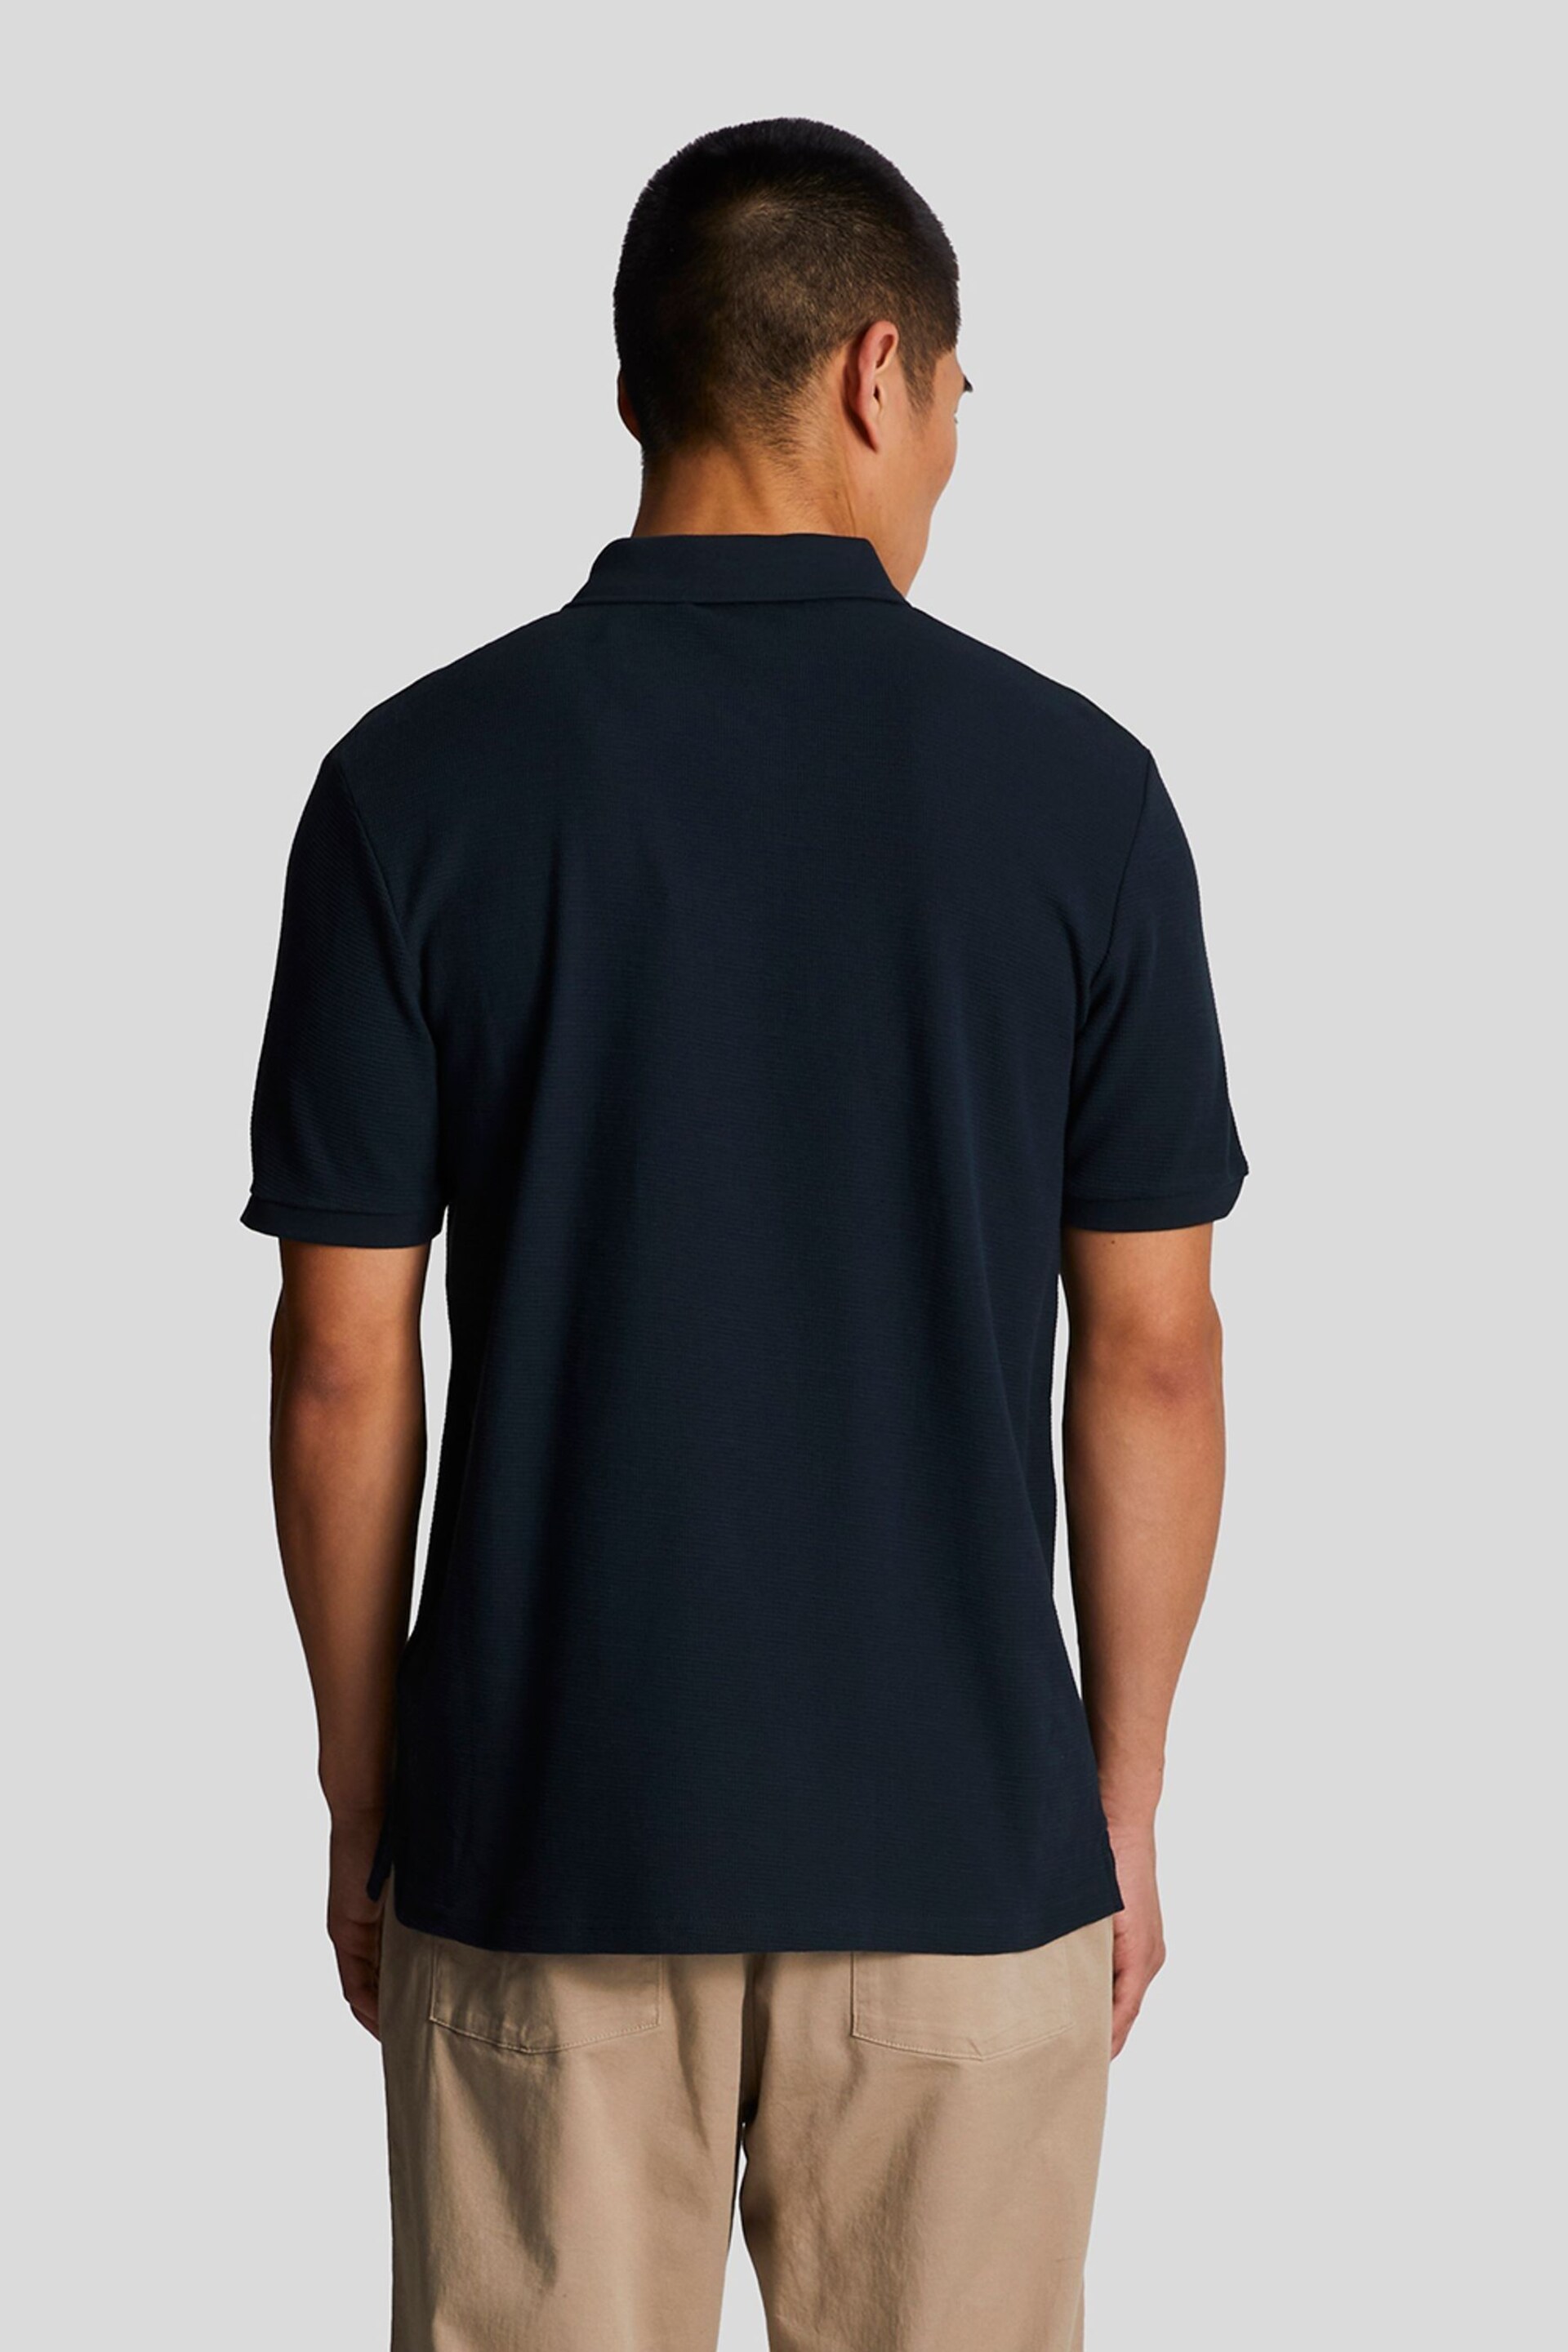 Lyle & Scott Blue Milano Polo Shirt - Image 3 of 5